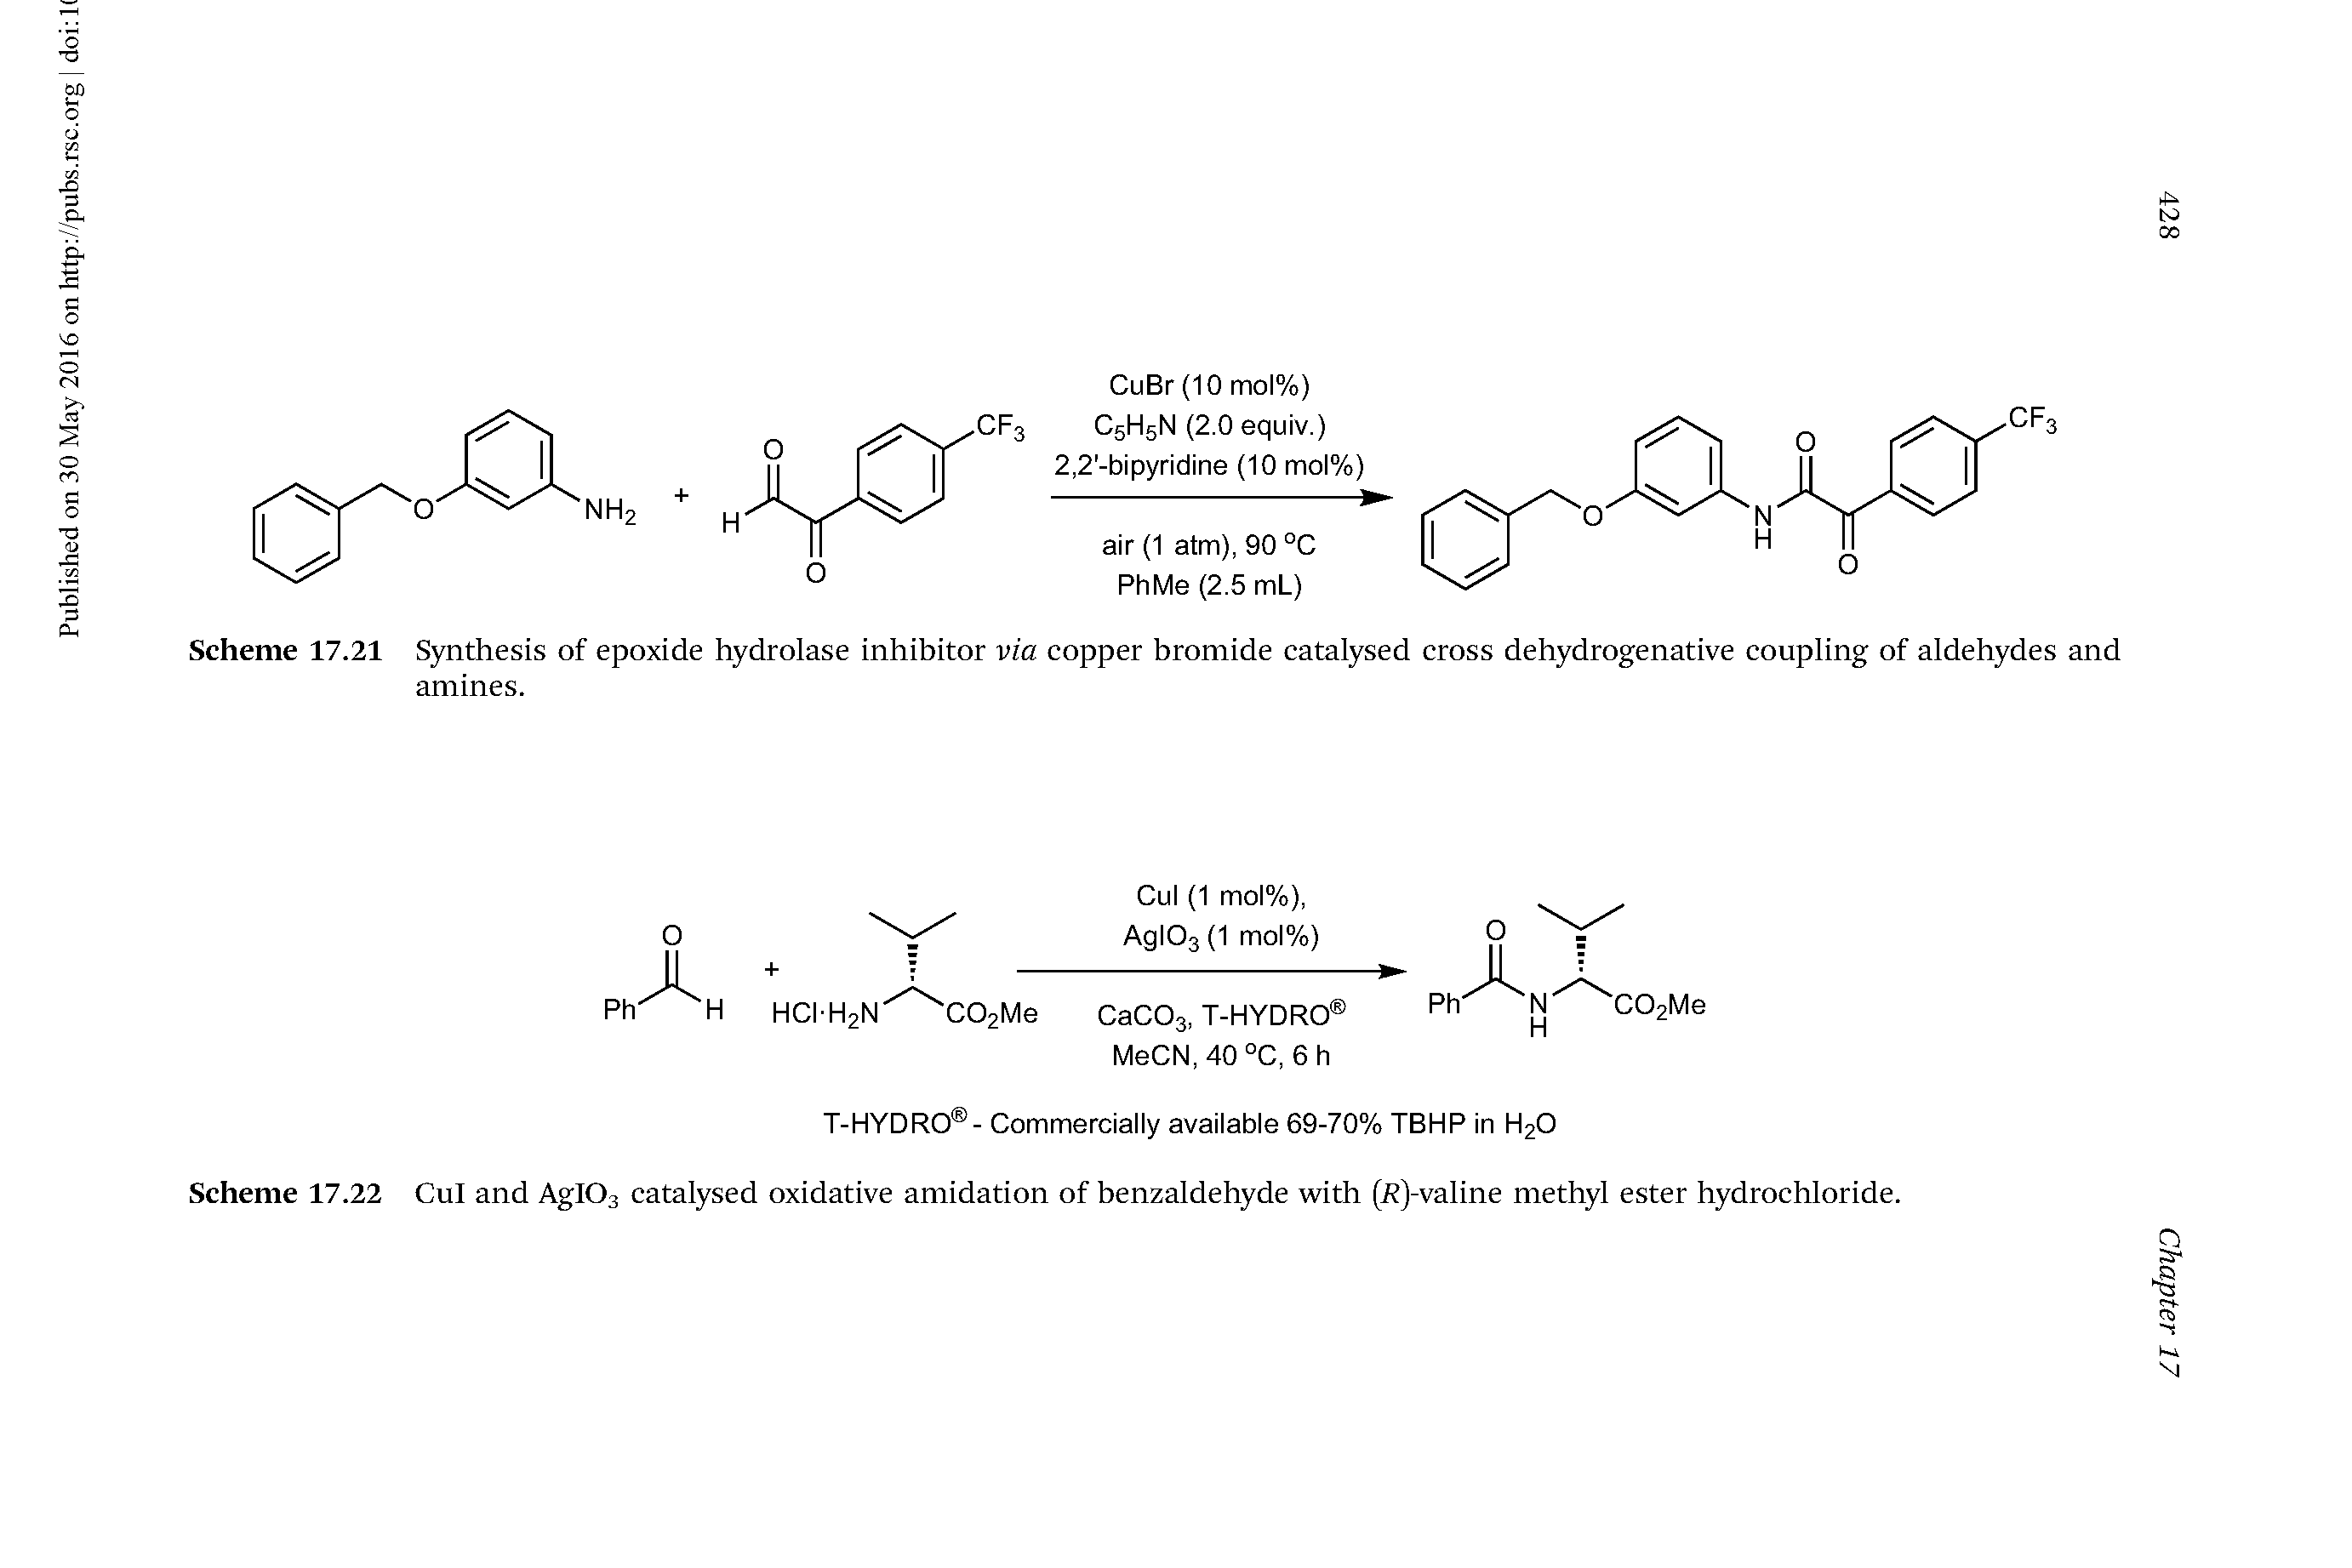 Scheme 17.22 Cul and AglOa catalysed oxidative amidation of benzaldehyde with (i )-valine methyl ester hydrochloride.